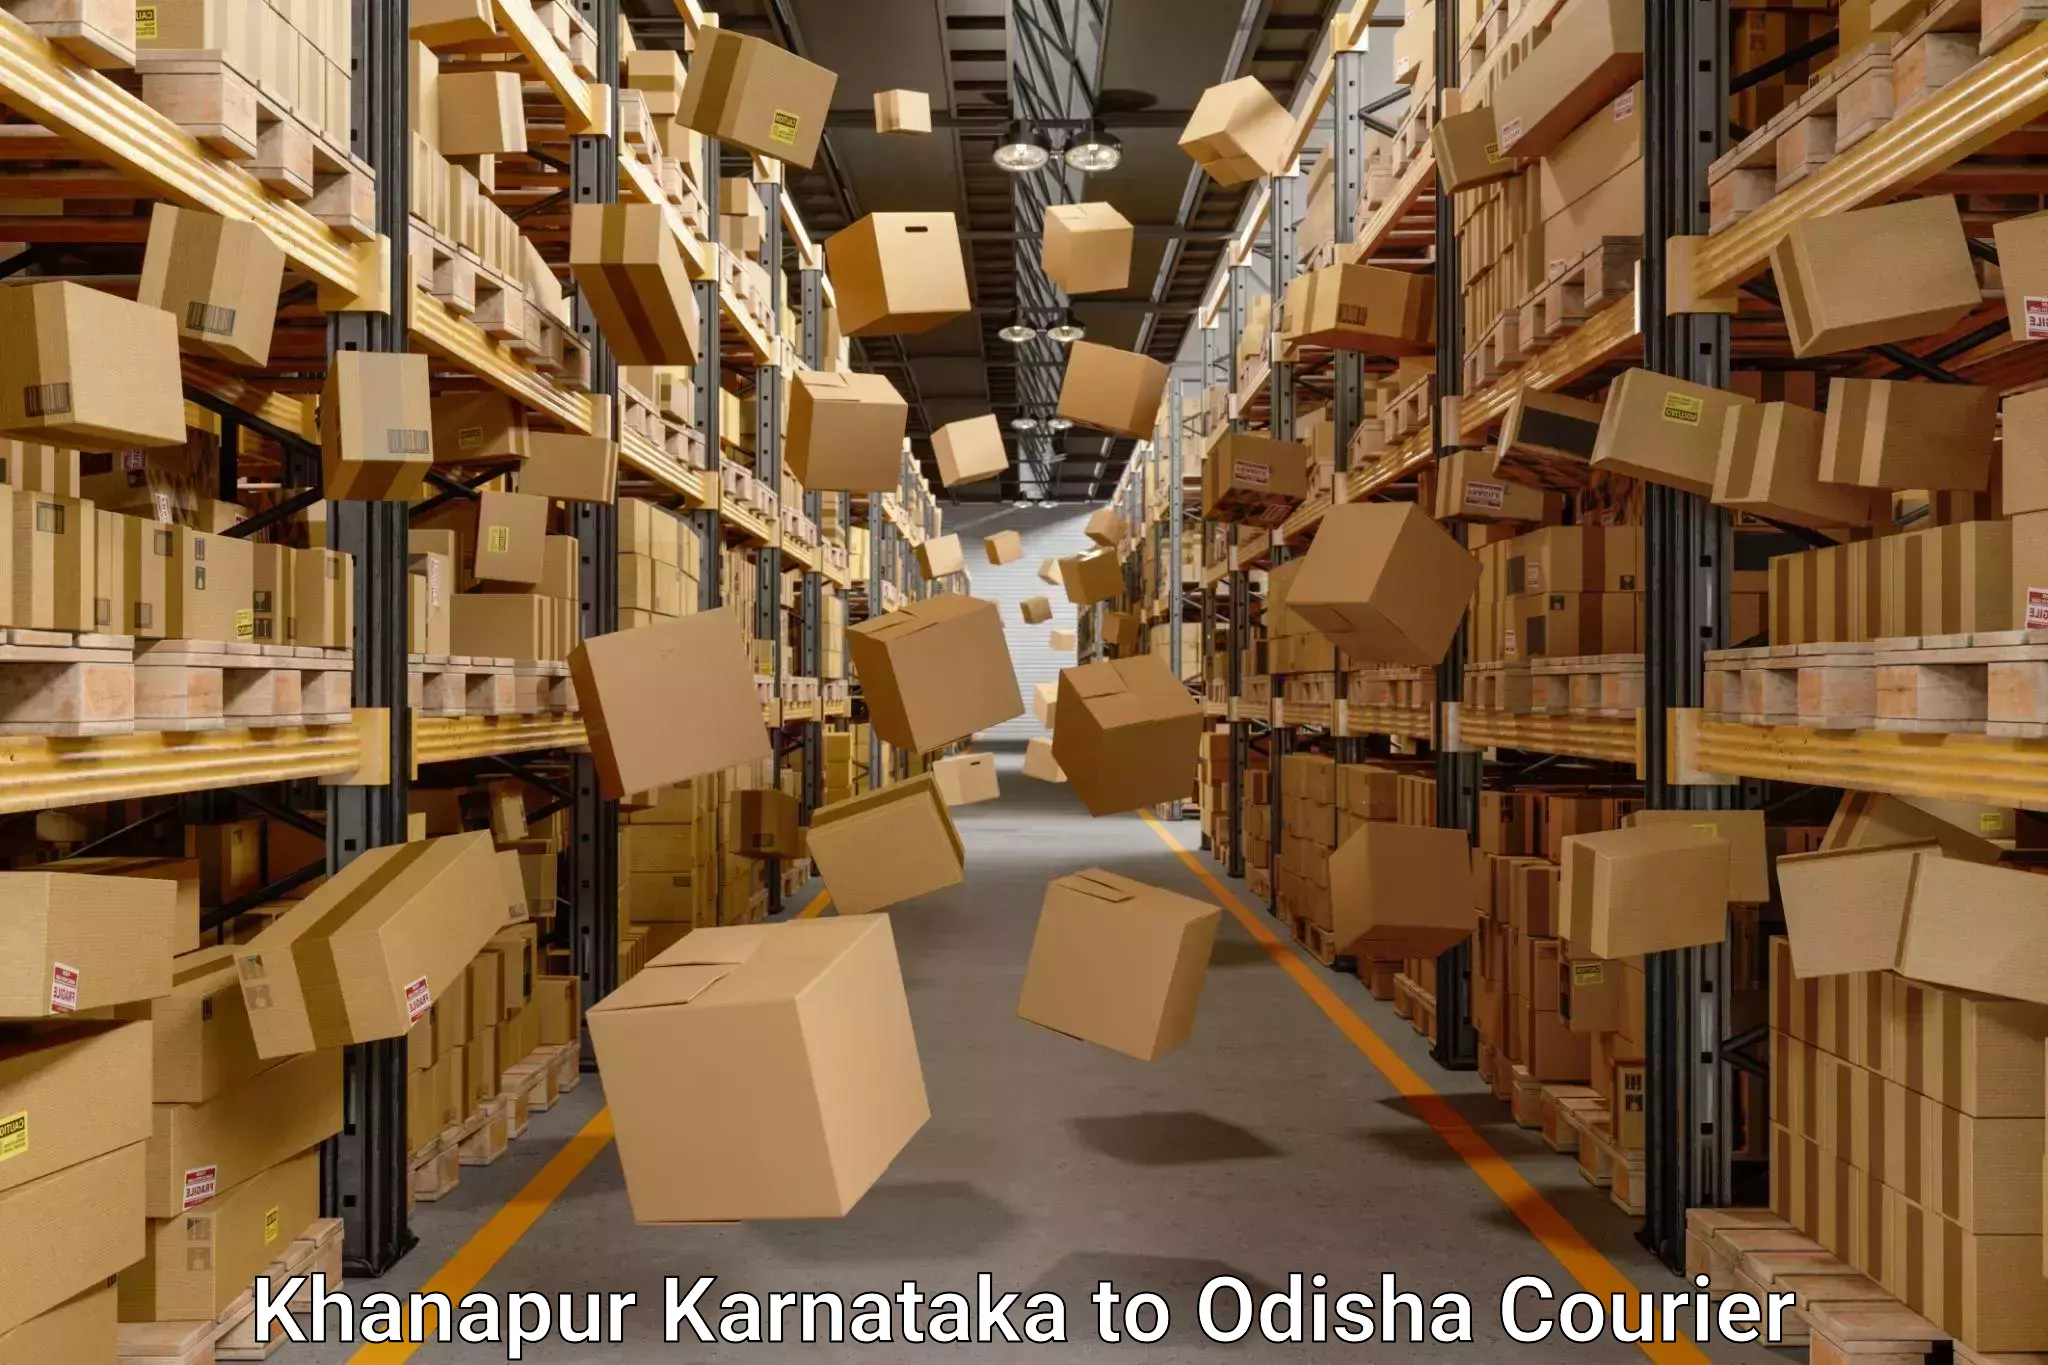 Budget-friendly movers Khanapur Karnataka to Boudh